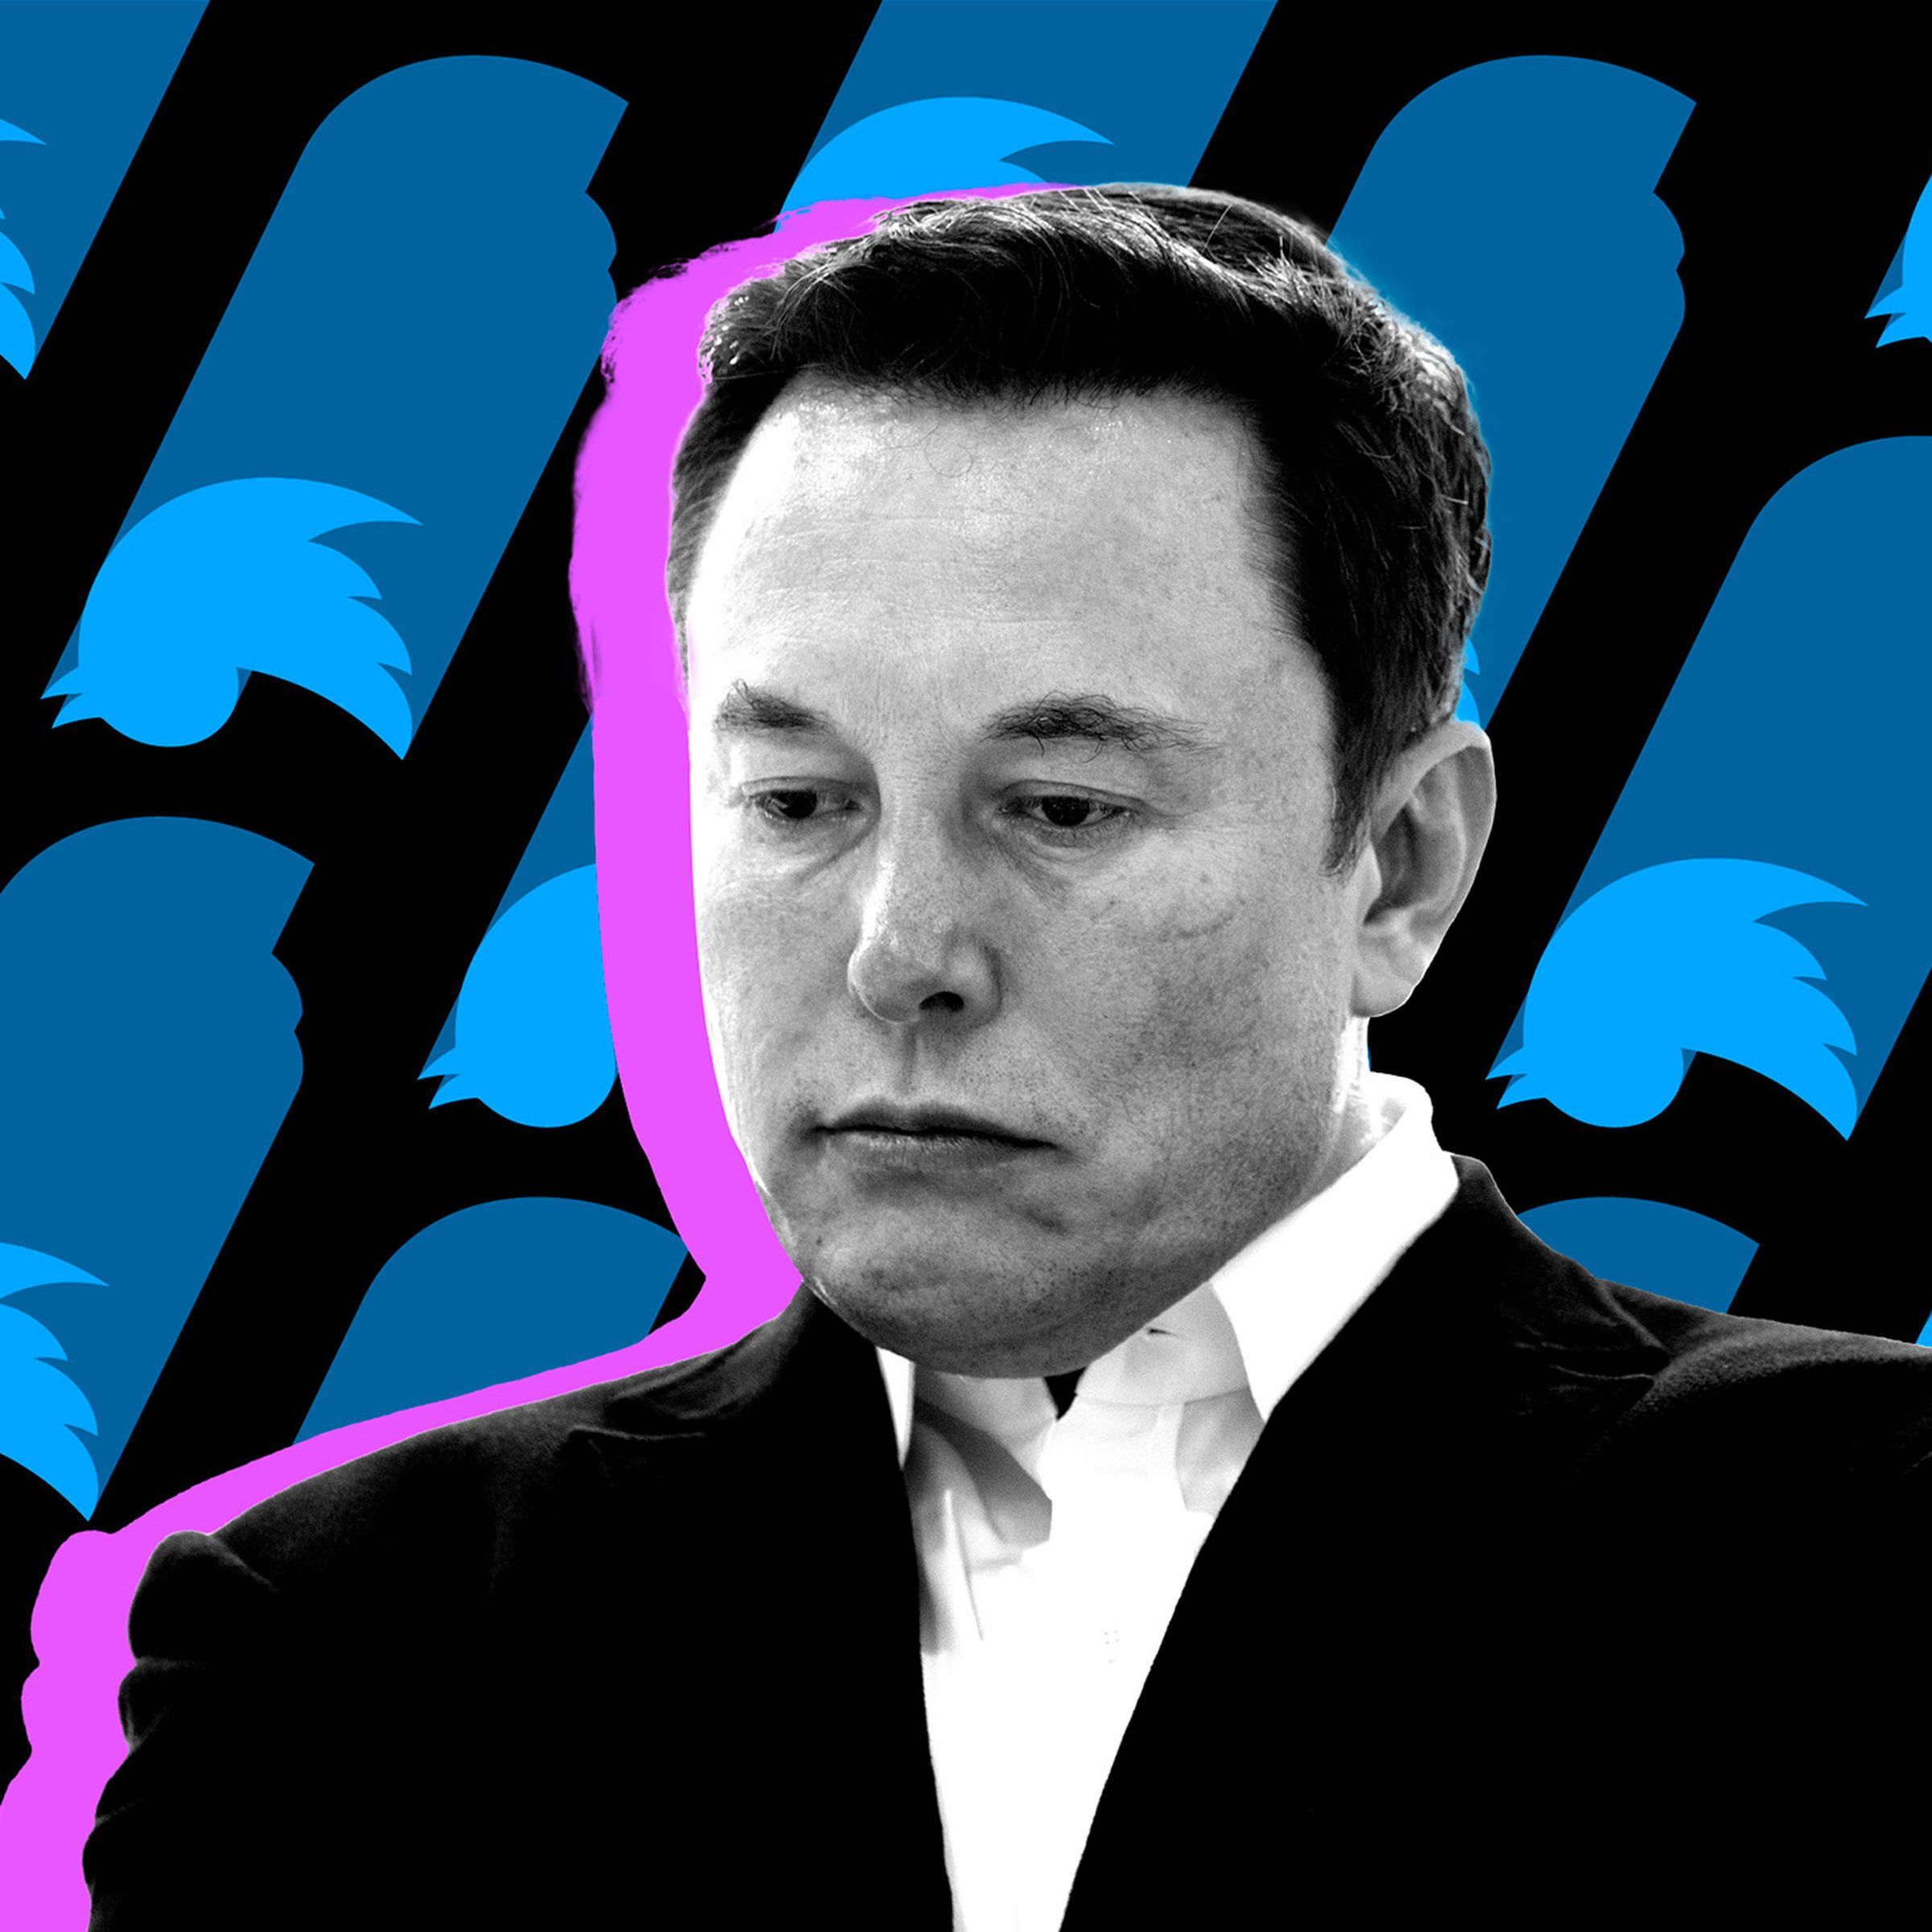 Elon Musk shown looking downward in front of upside-down Twitter logos.